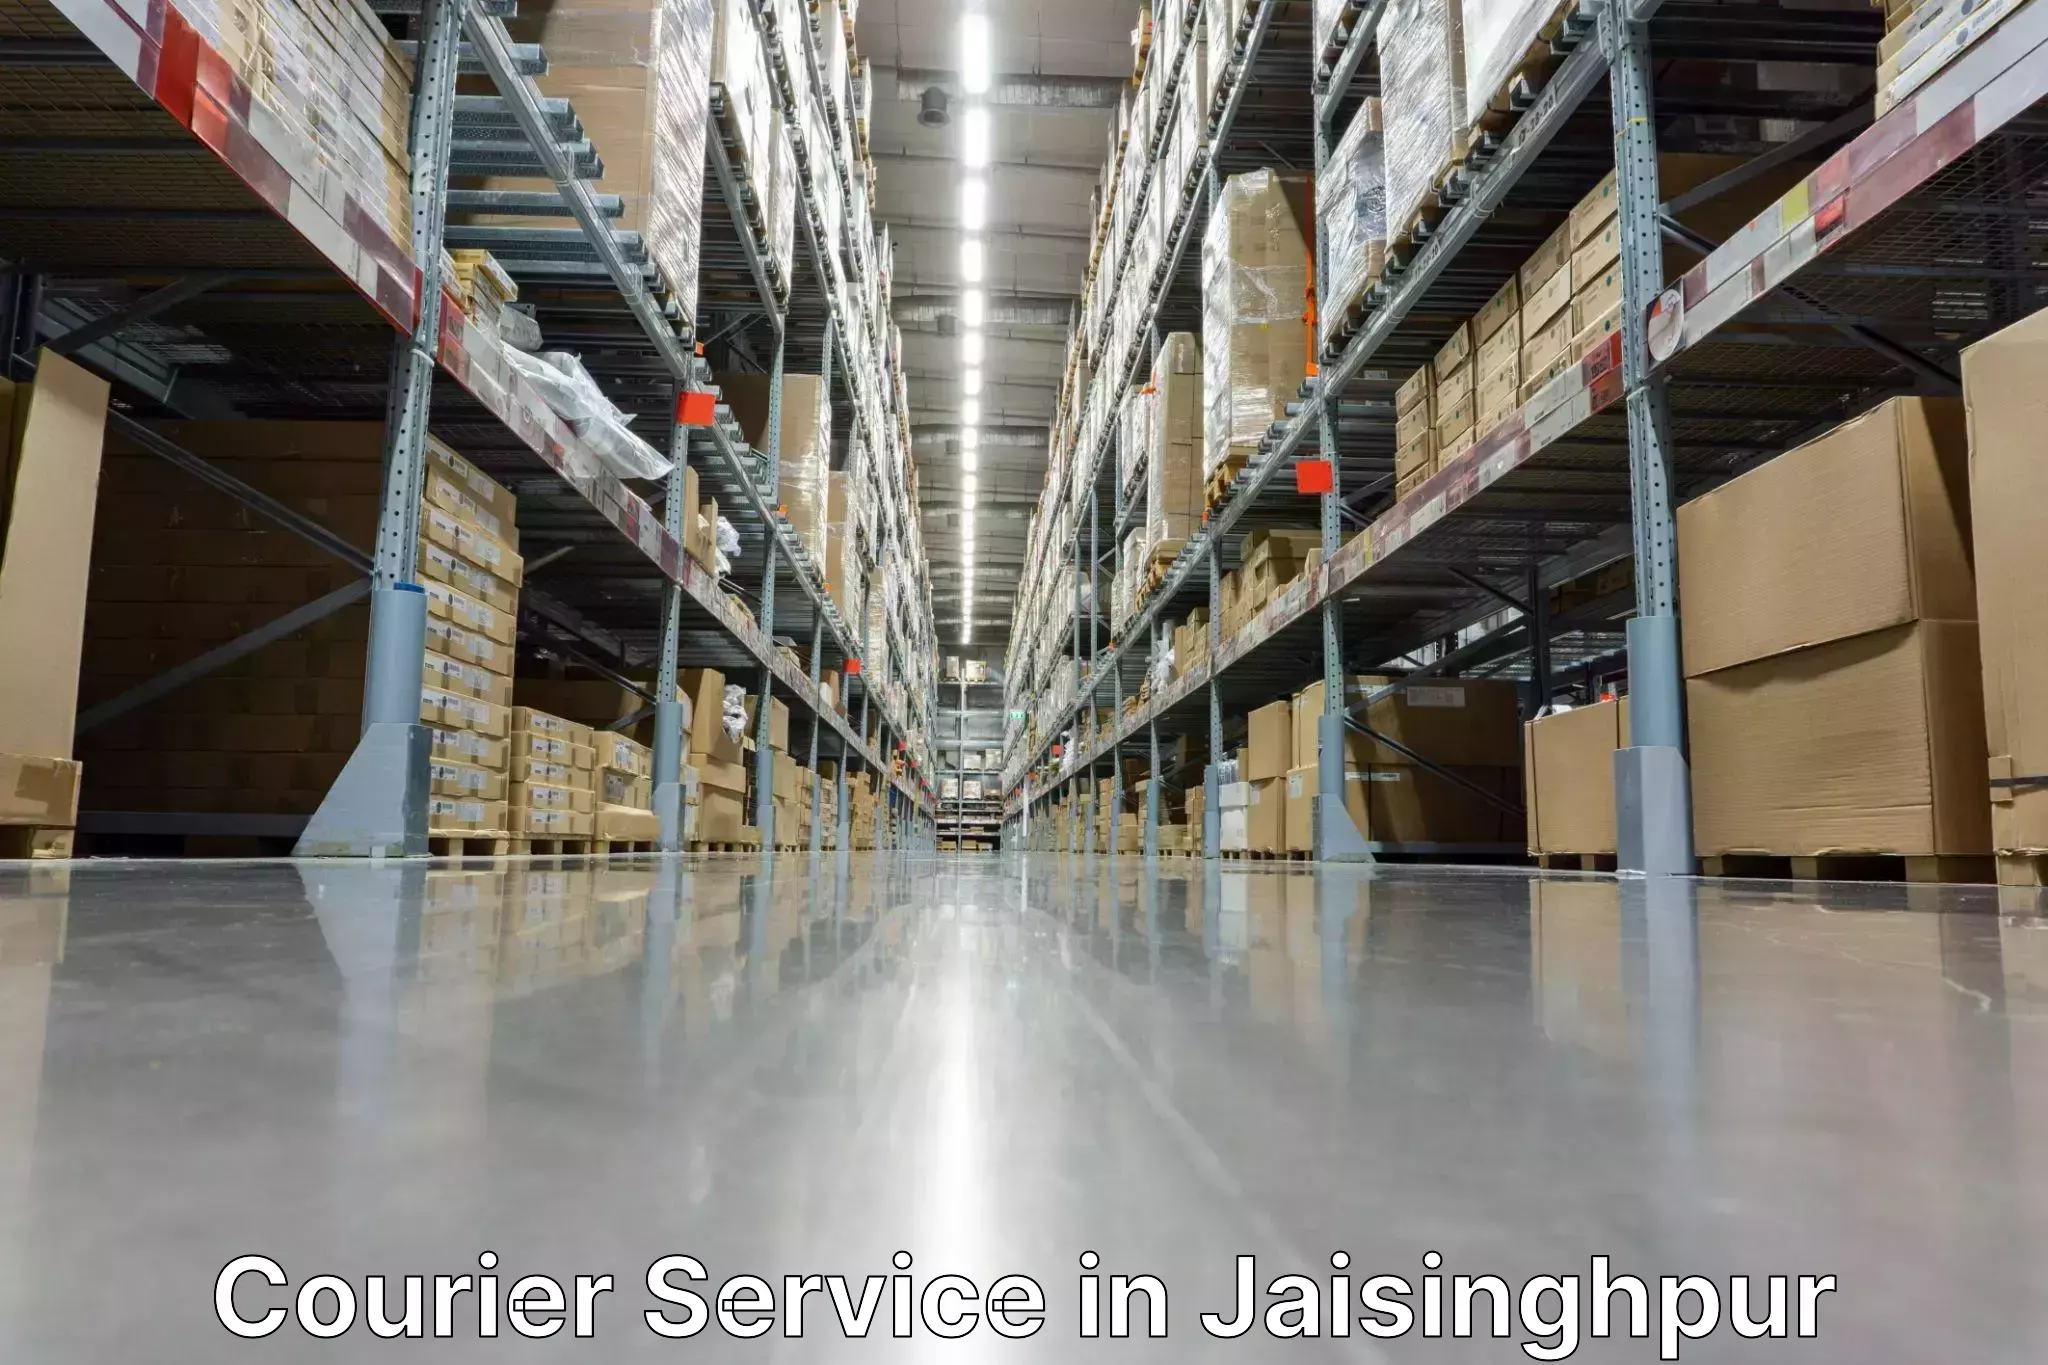 Personalized courier experiences in Jaisinghpur